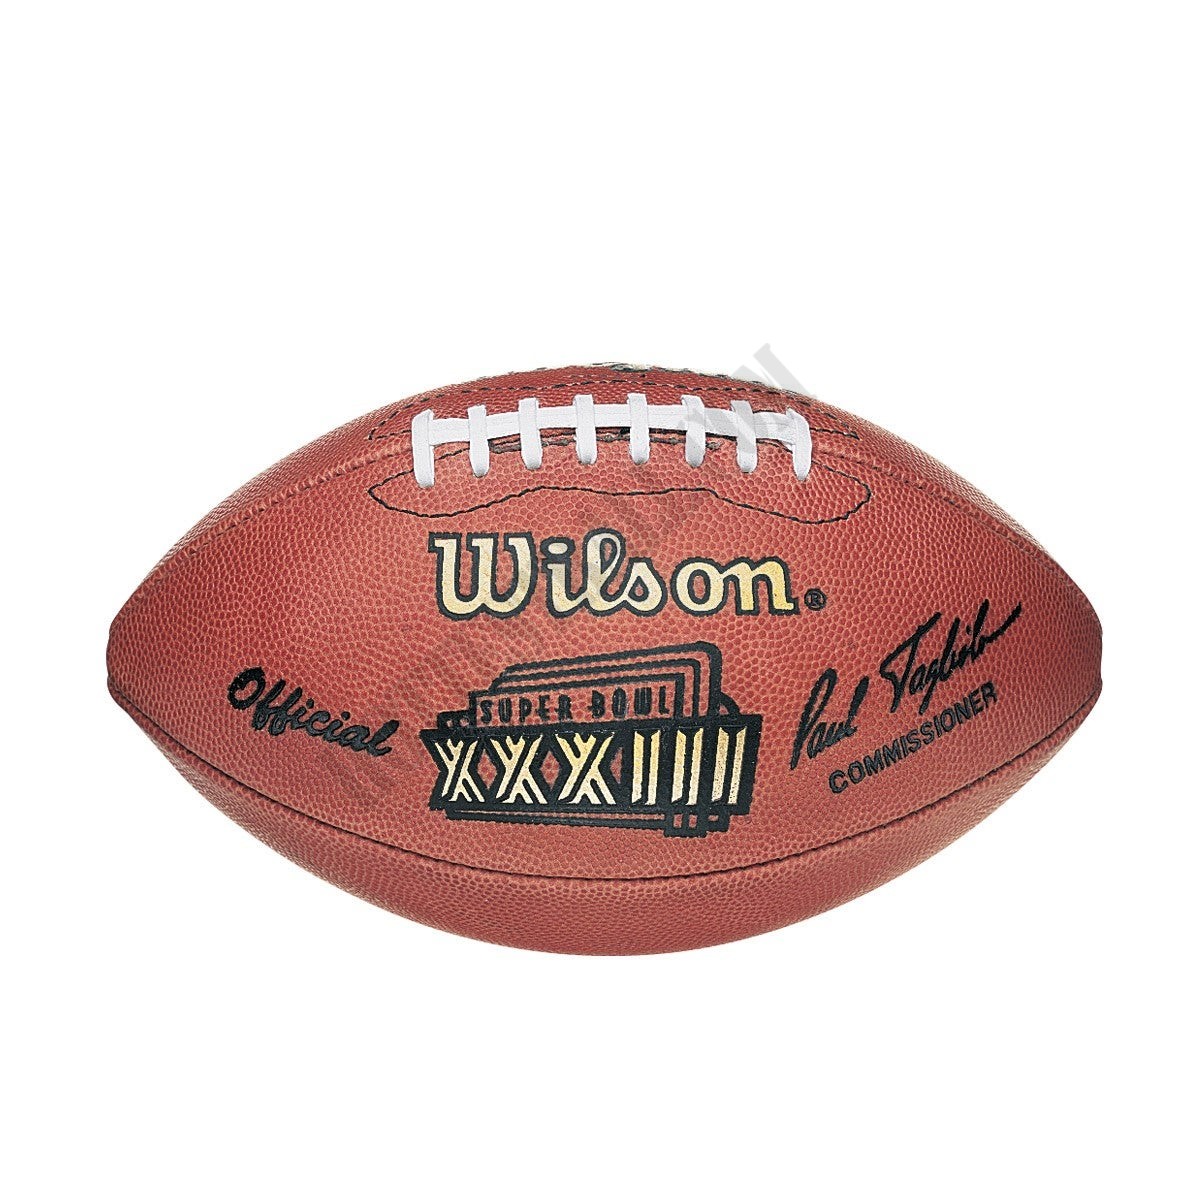 Super Bowl XXXIII Game Football - Denver Broncos ● Wilson Promotions - -0